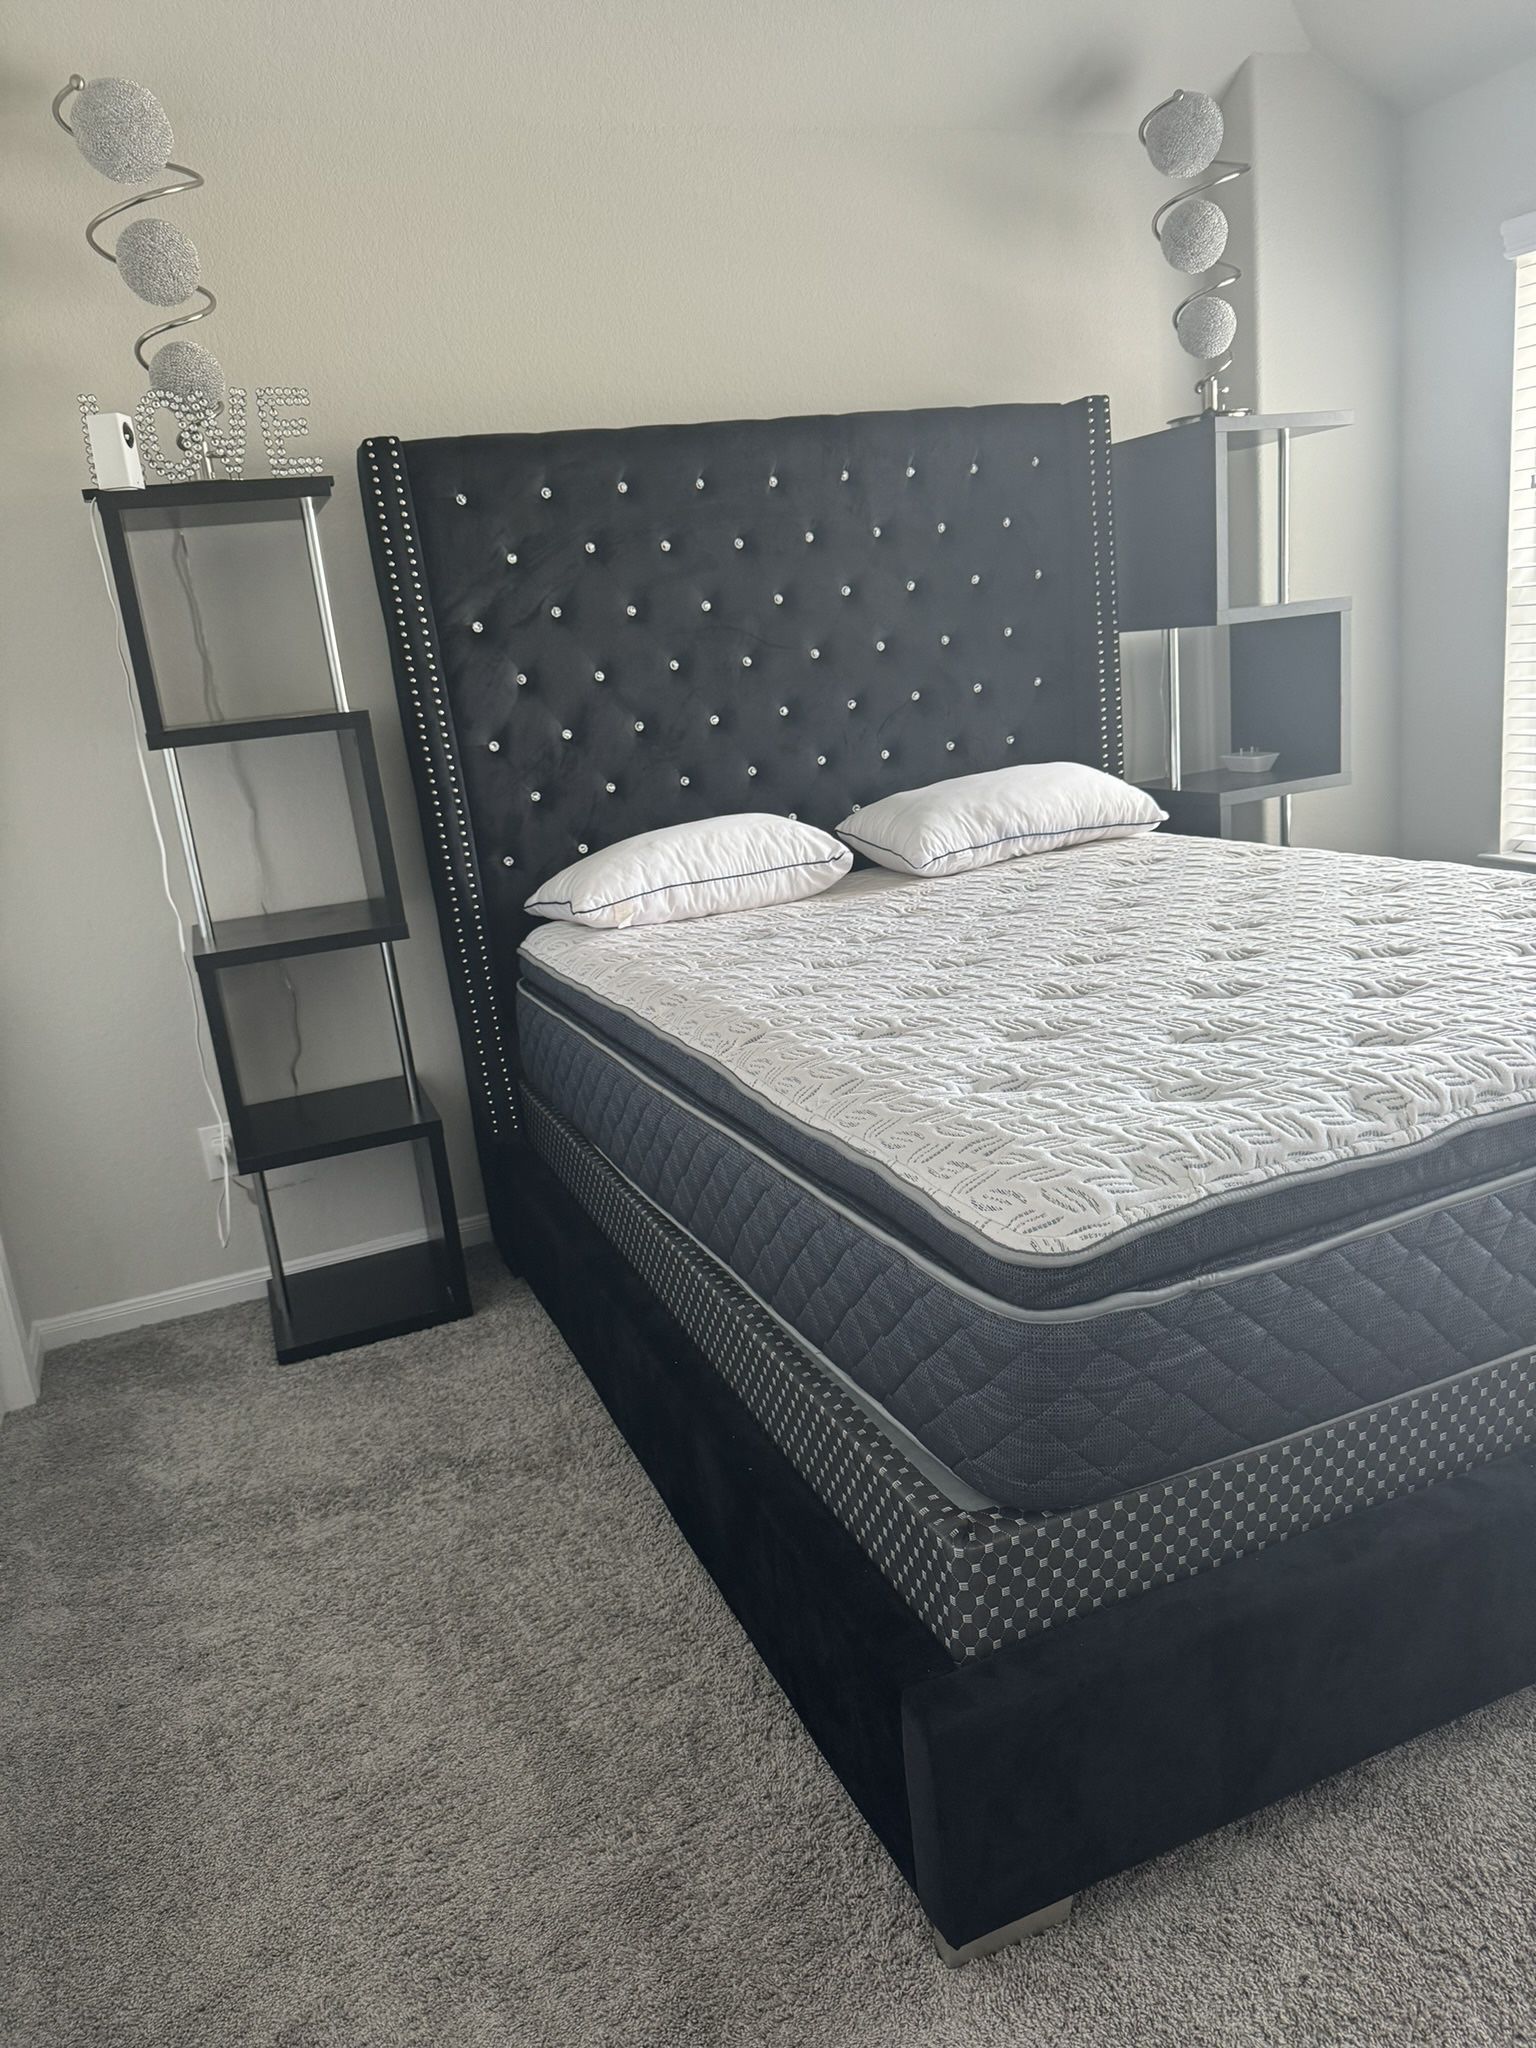 Entire Bedroom Set For Sale